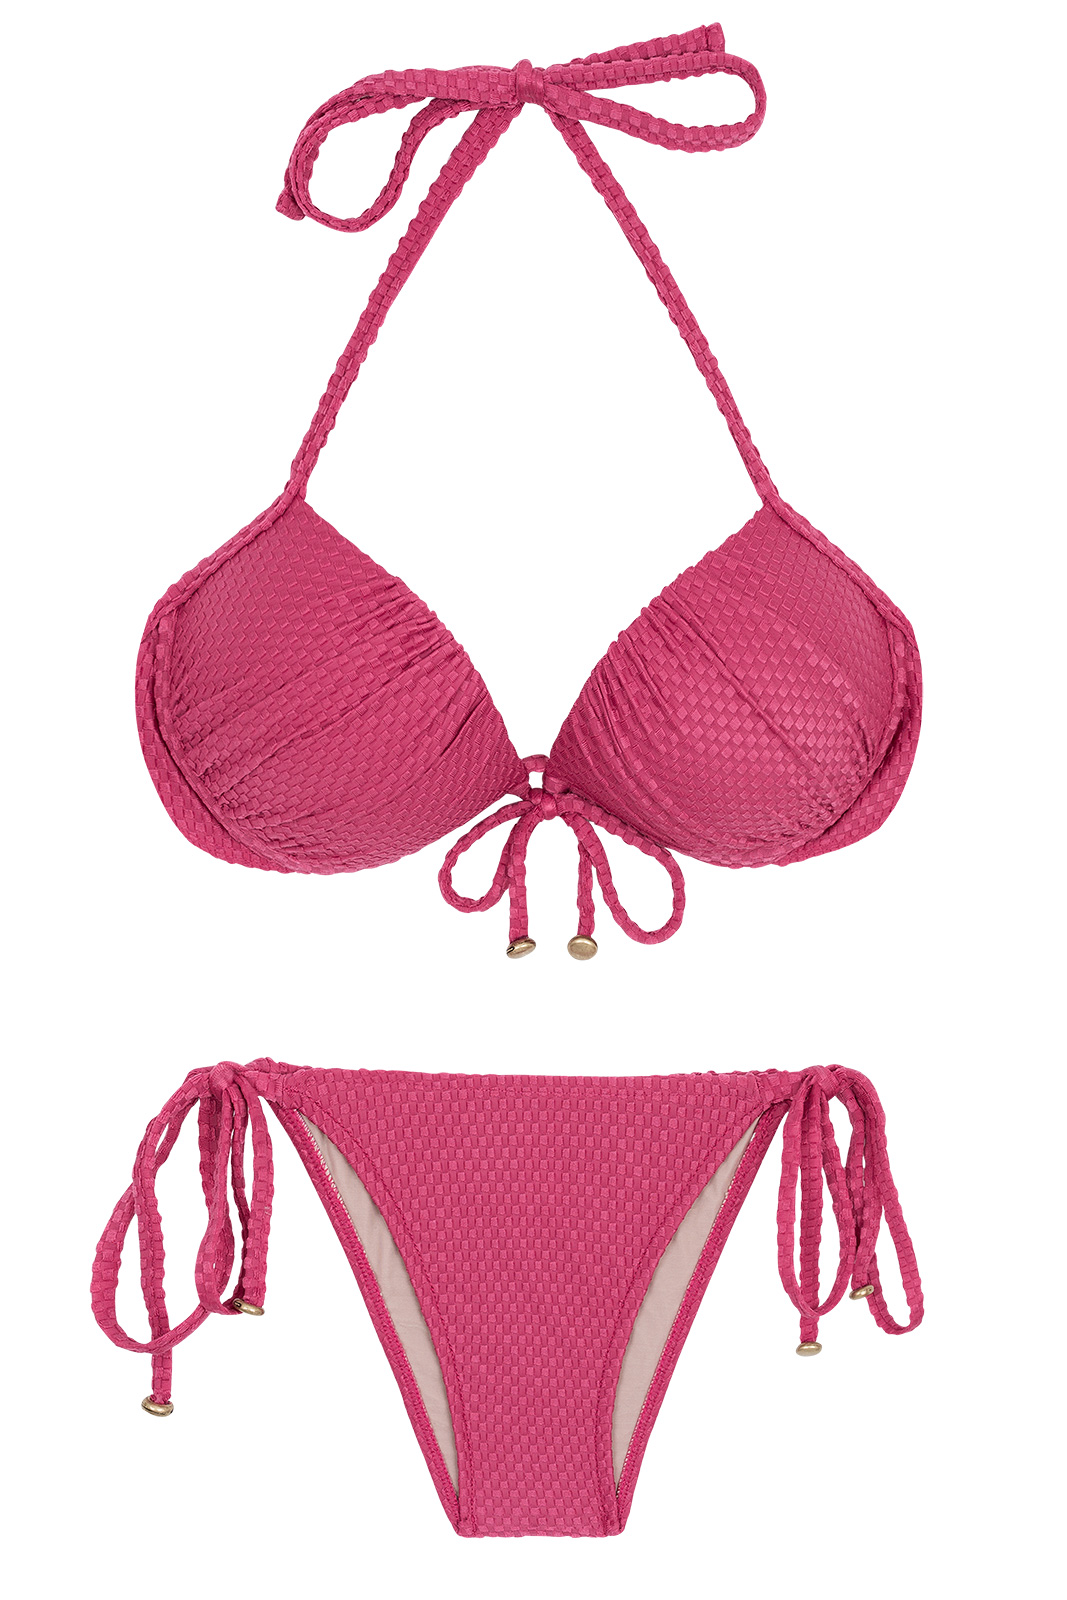 Textured Fuchsia Pink Side Tie Balconette Bikini Cloque Lichia